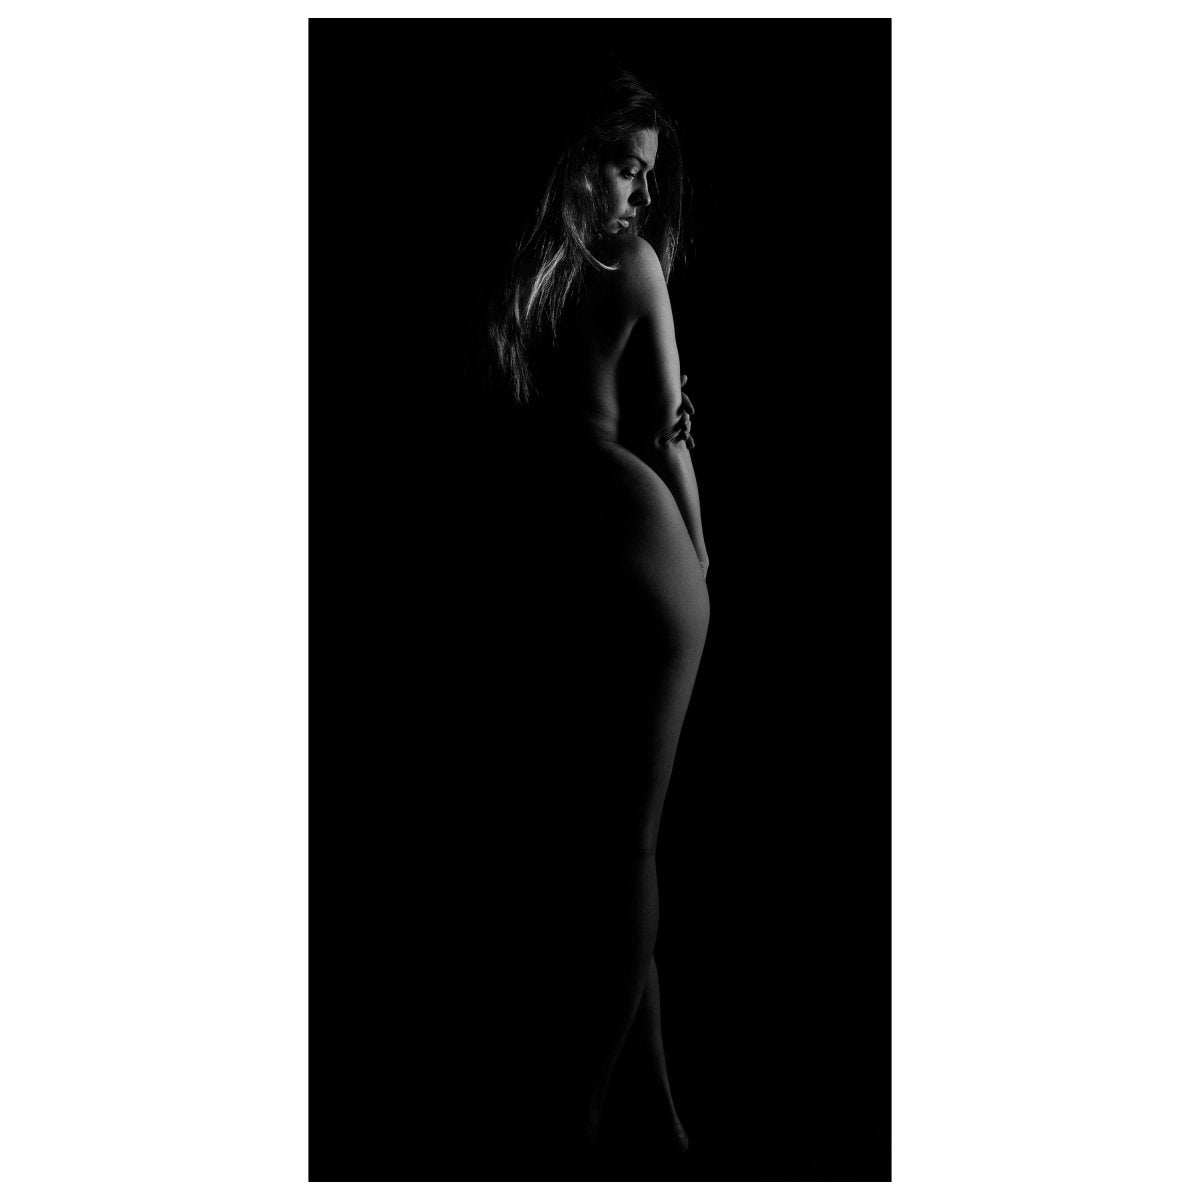 Türtapete Frau, Model, schwarz weiß M1431 - Bild 2